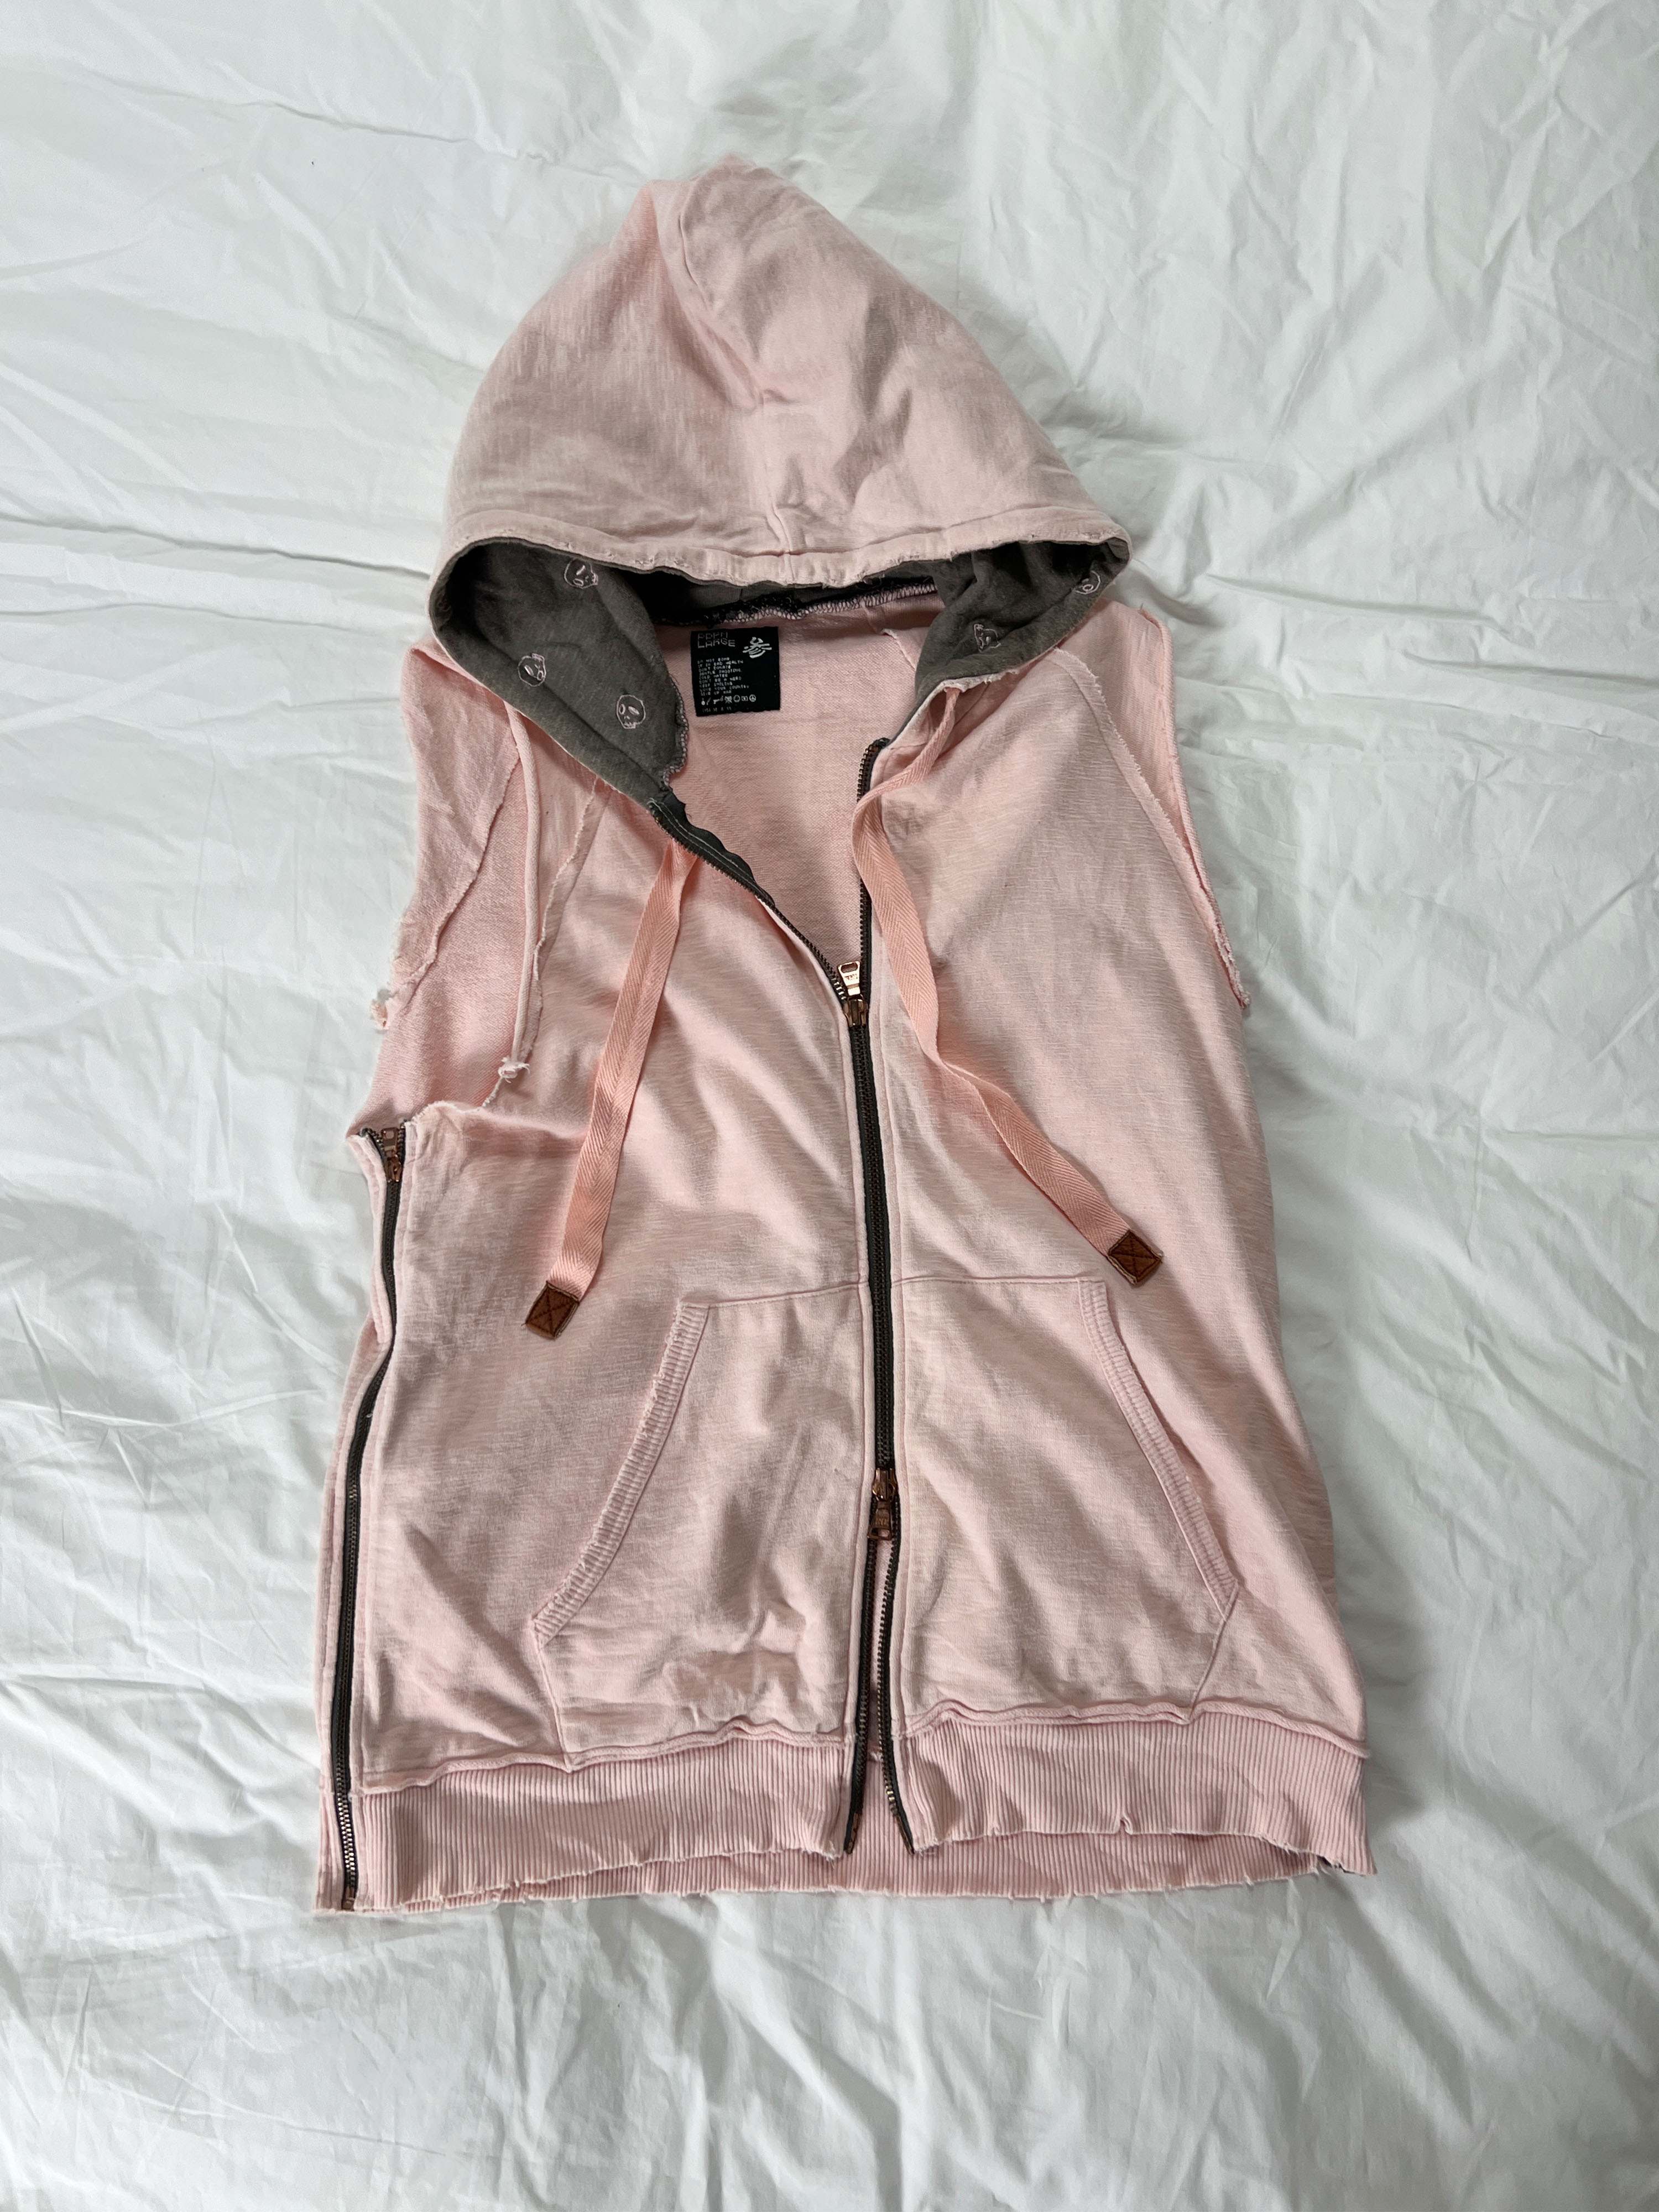 PPFM sleeveless pink hoodie